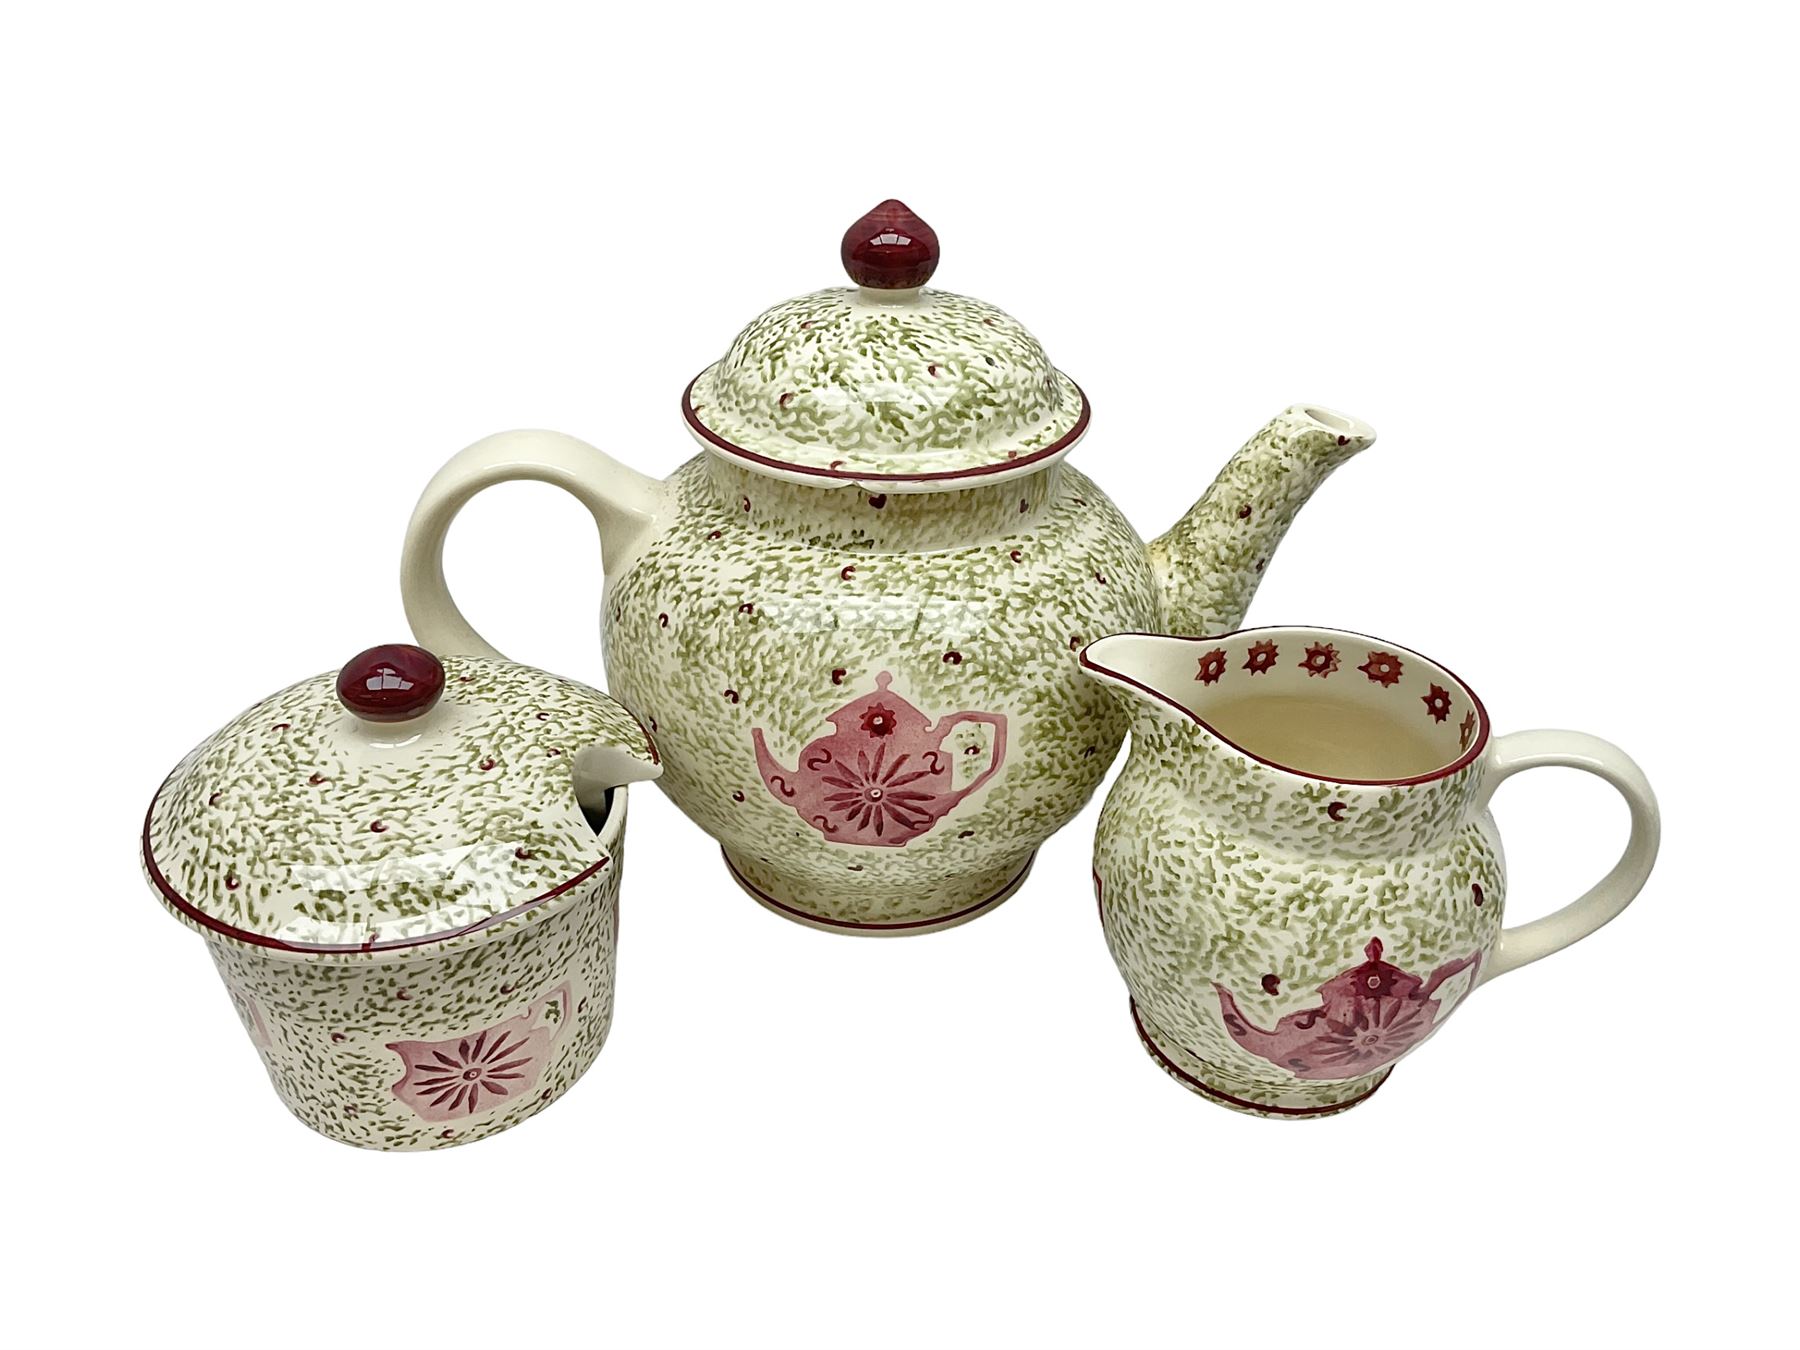 Emma Bridgewater for Betty's Tearoom teapot